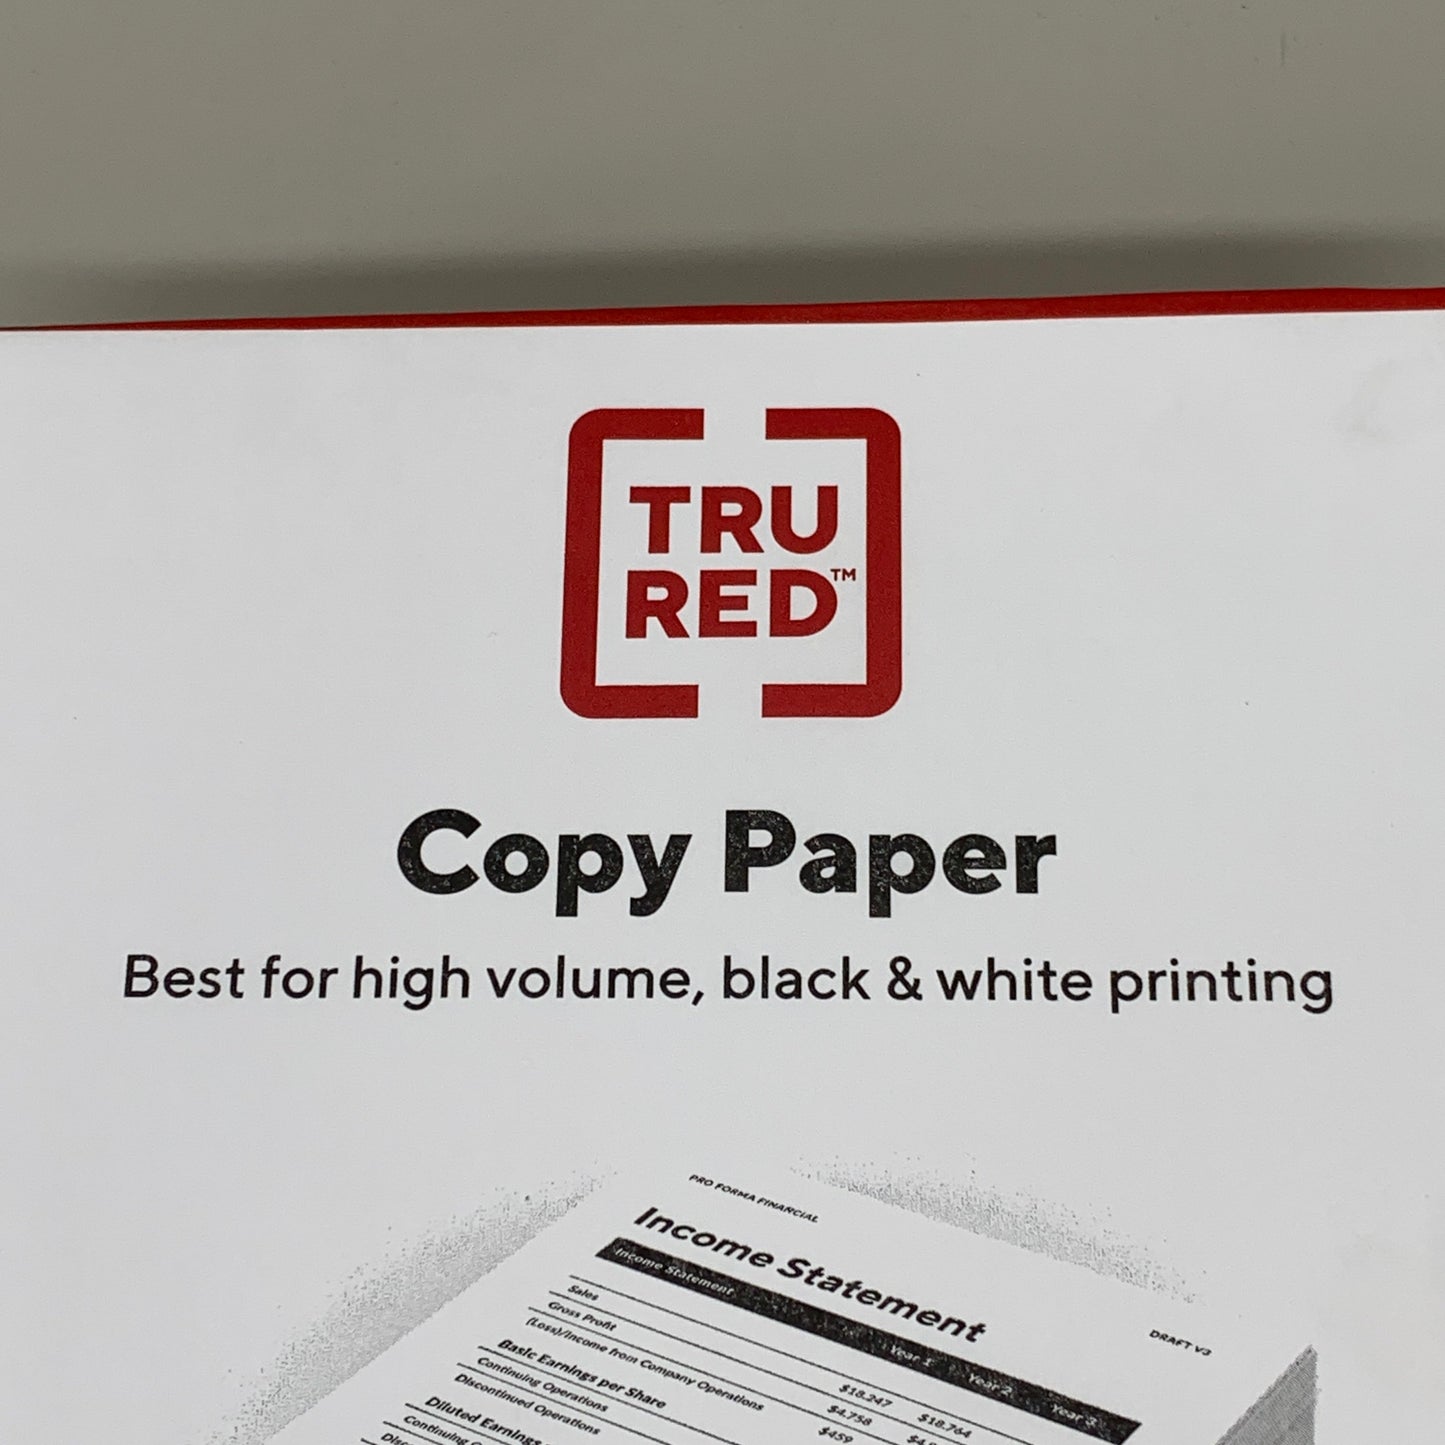 ZA@ TRU RED 5000 SHEETS White Copy Paper for High Volume Printing 10 Reams J